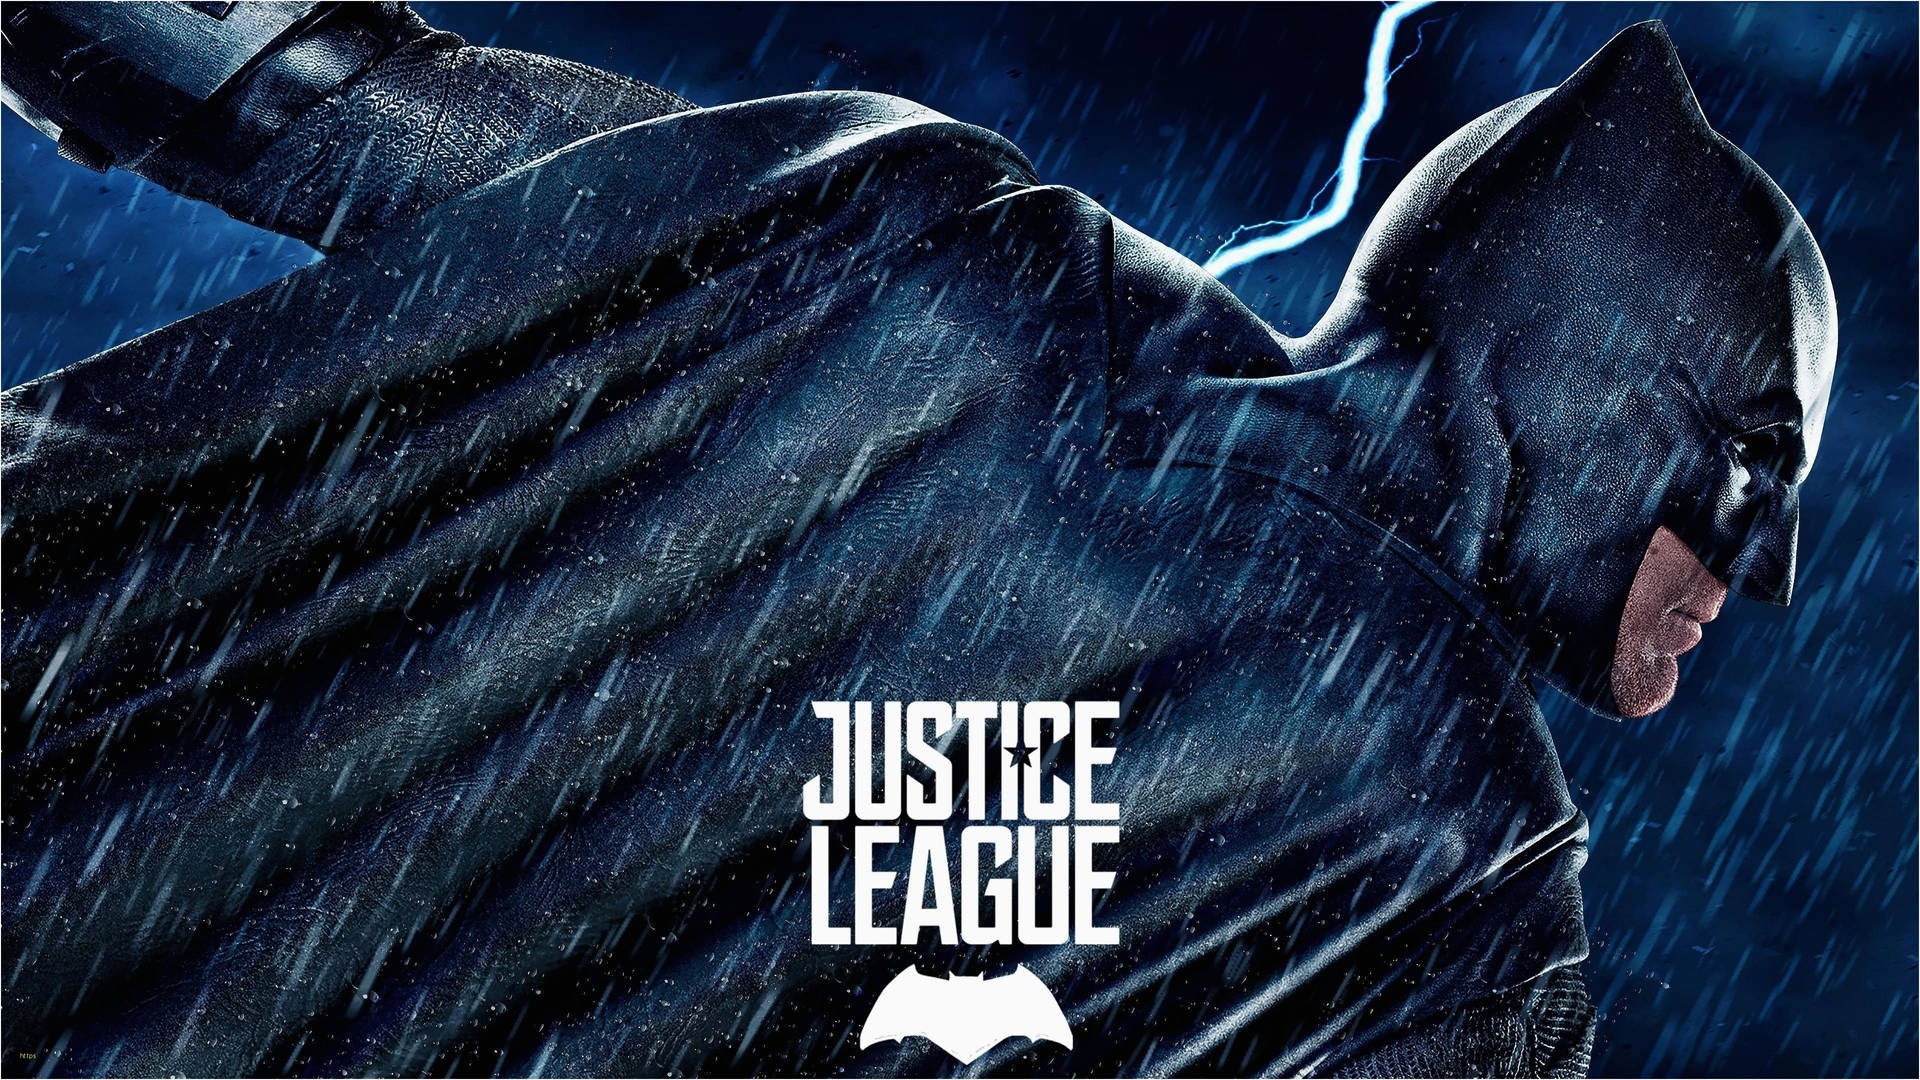 Batman On Justice League 4k Wallpaper